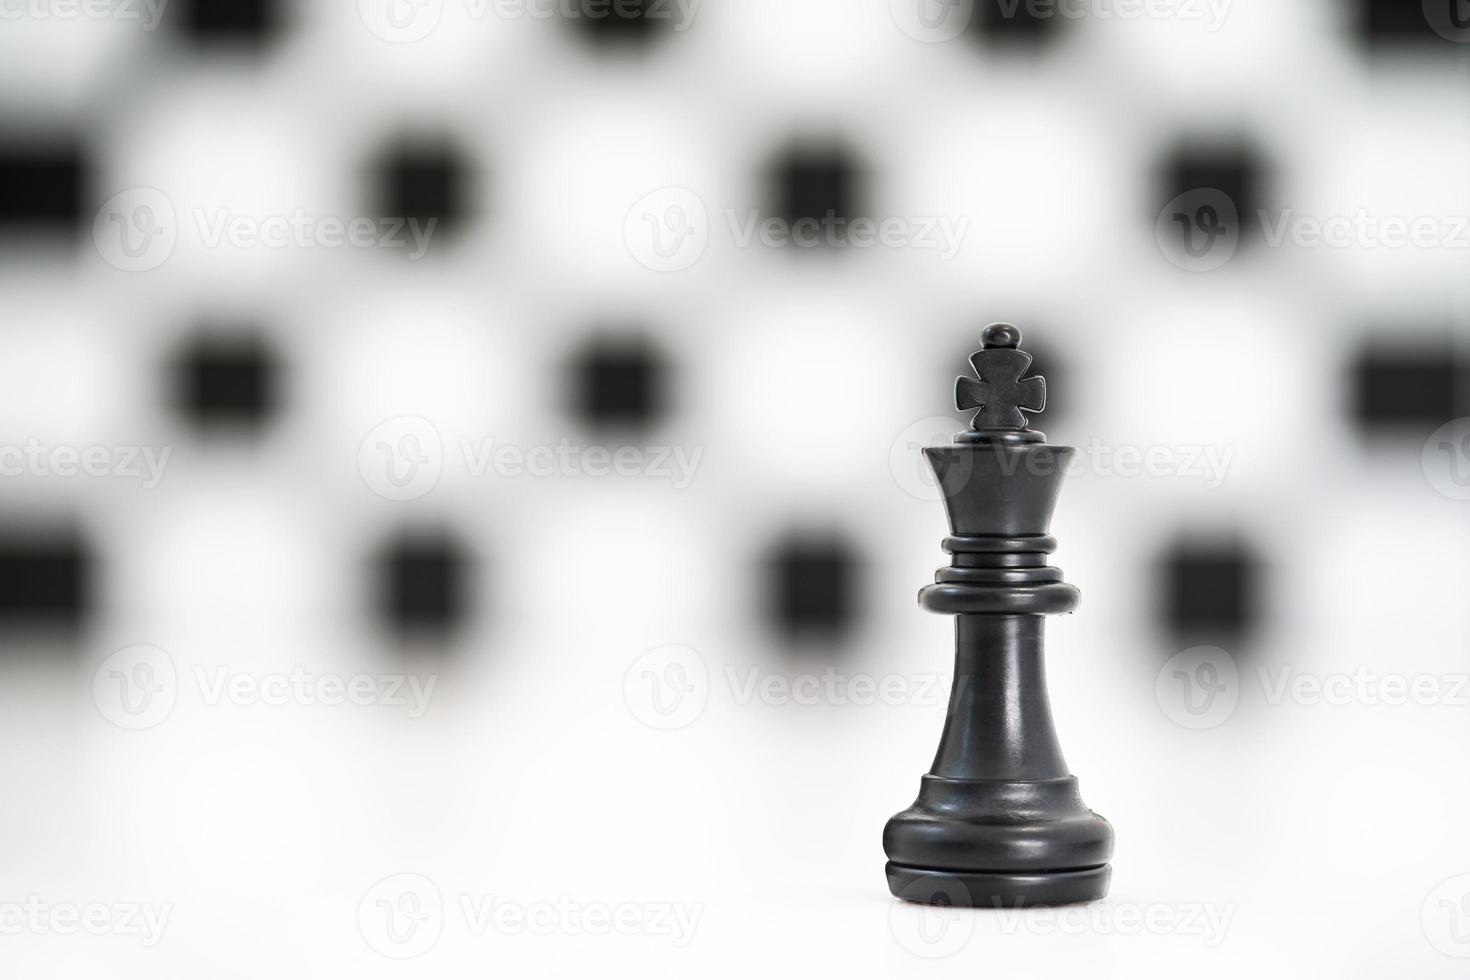 Set of Black chess pieces on white background photo